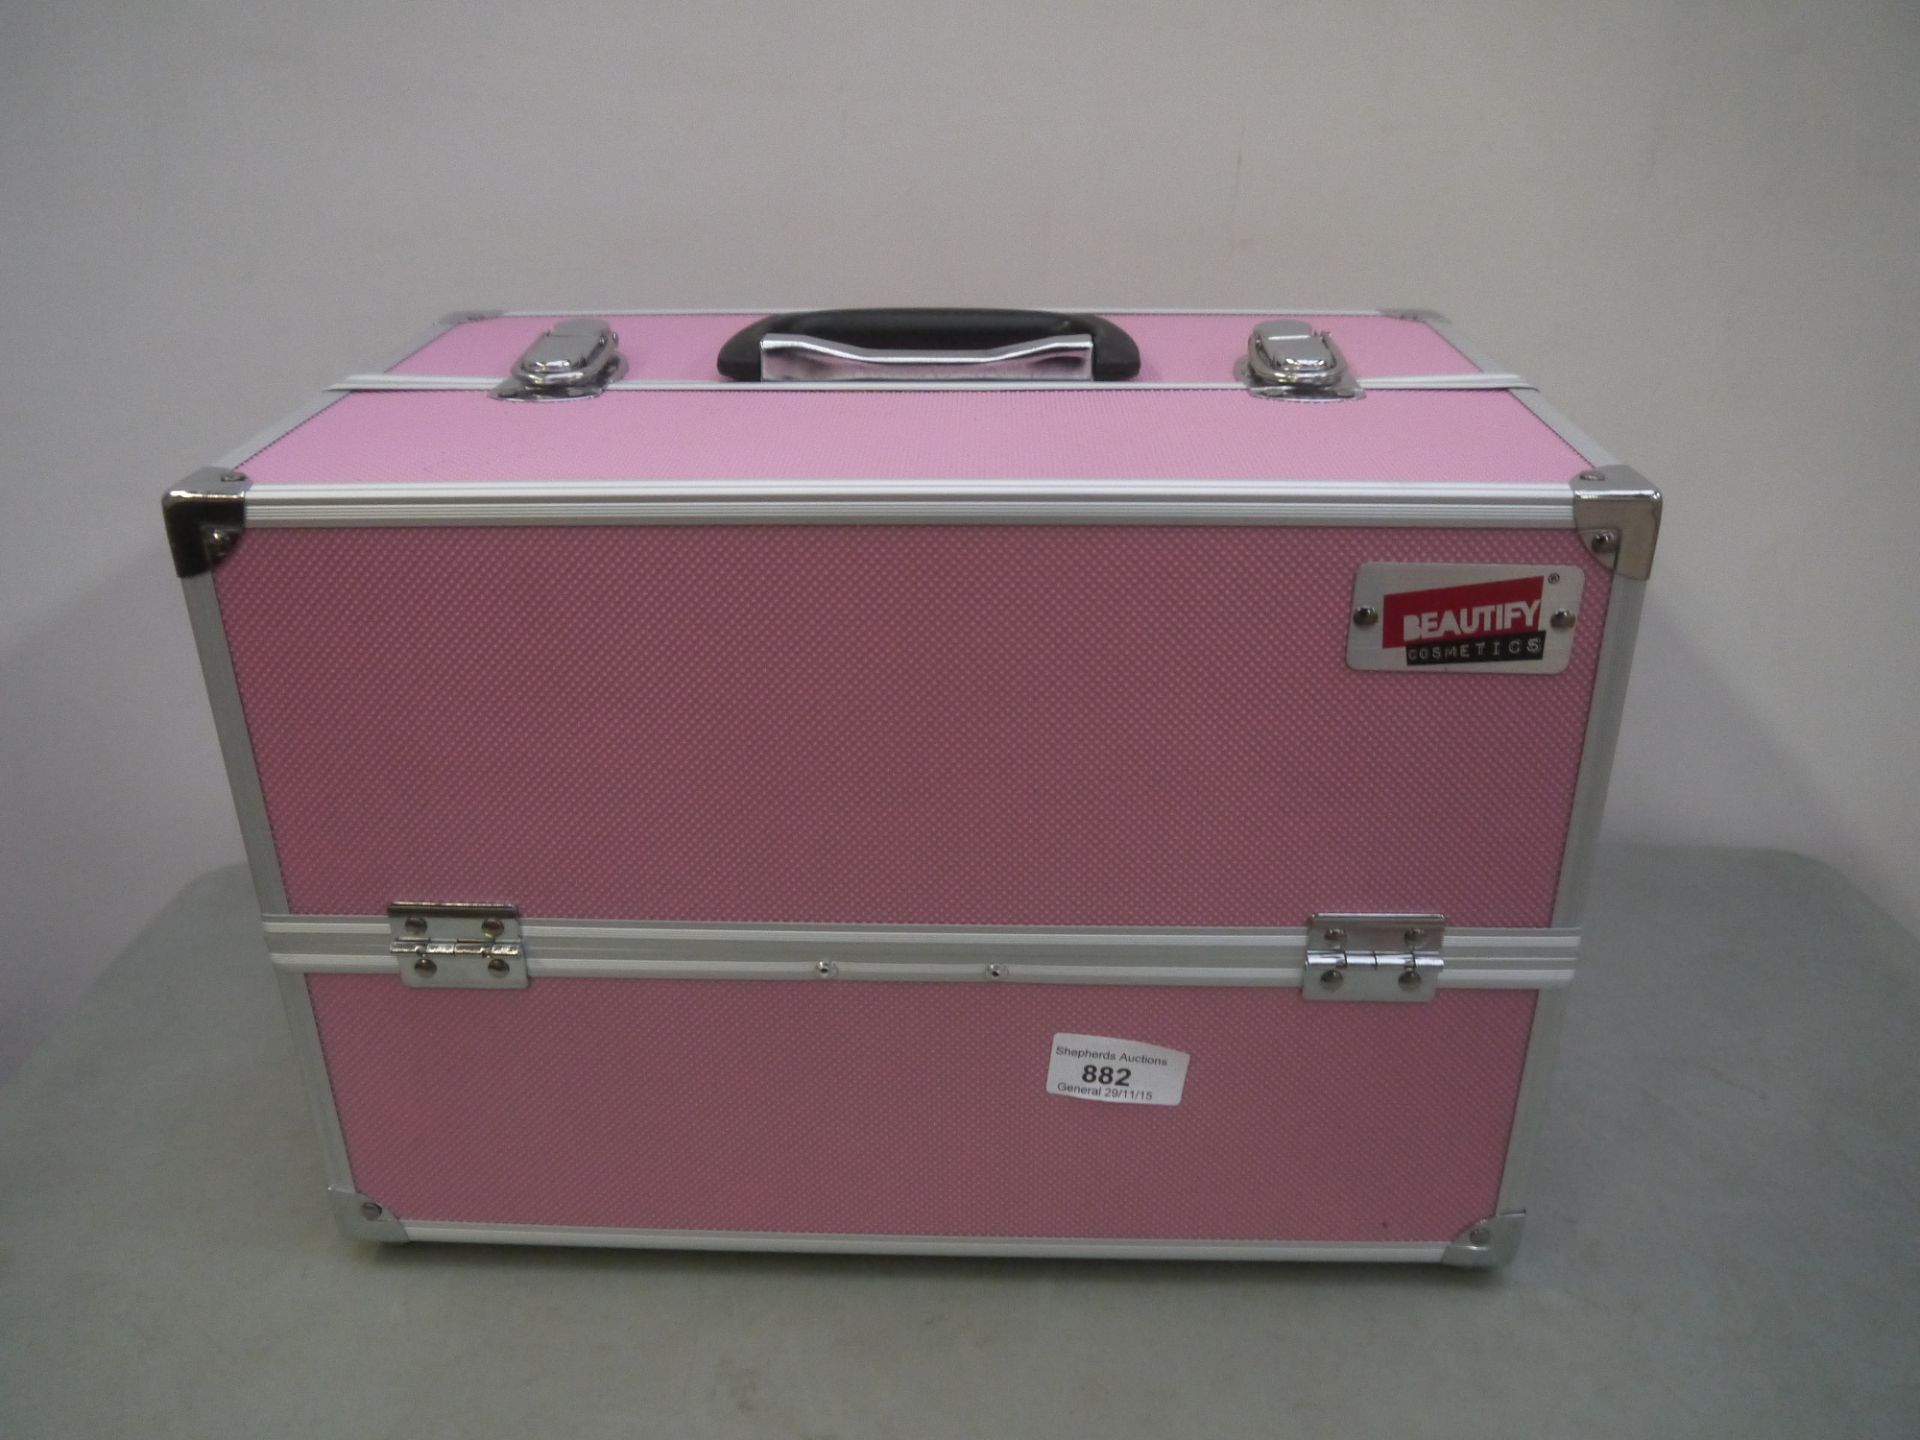 Beautify Cosmetics Medium Vanity Case in Pink.